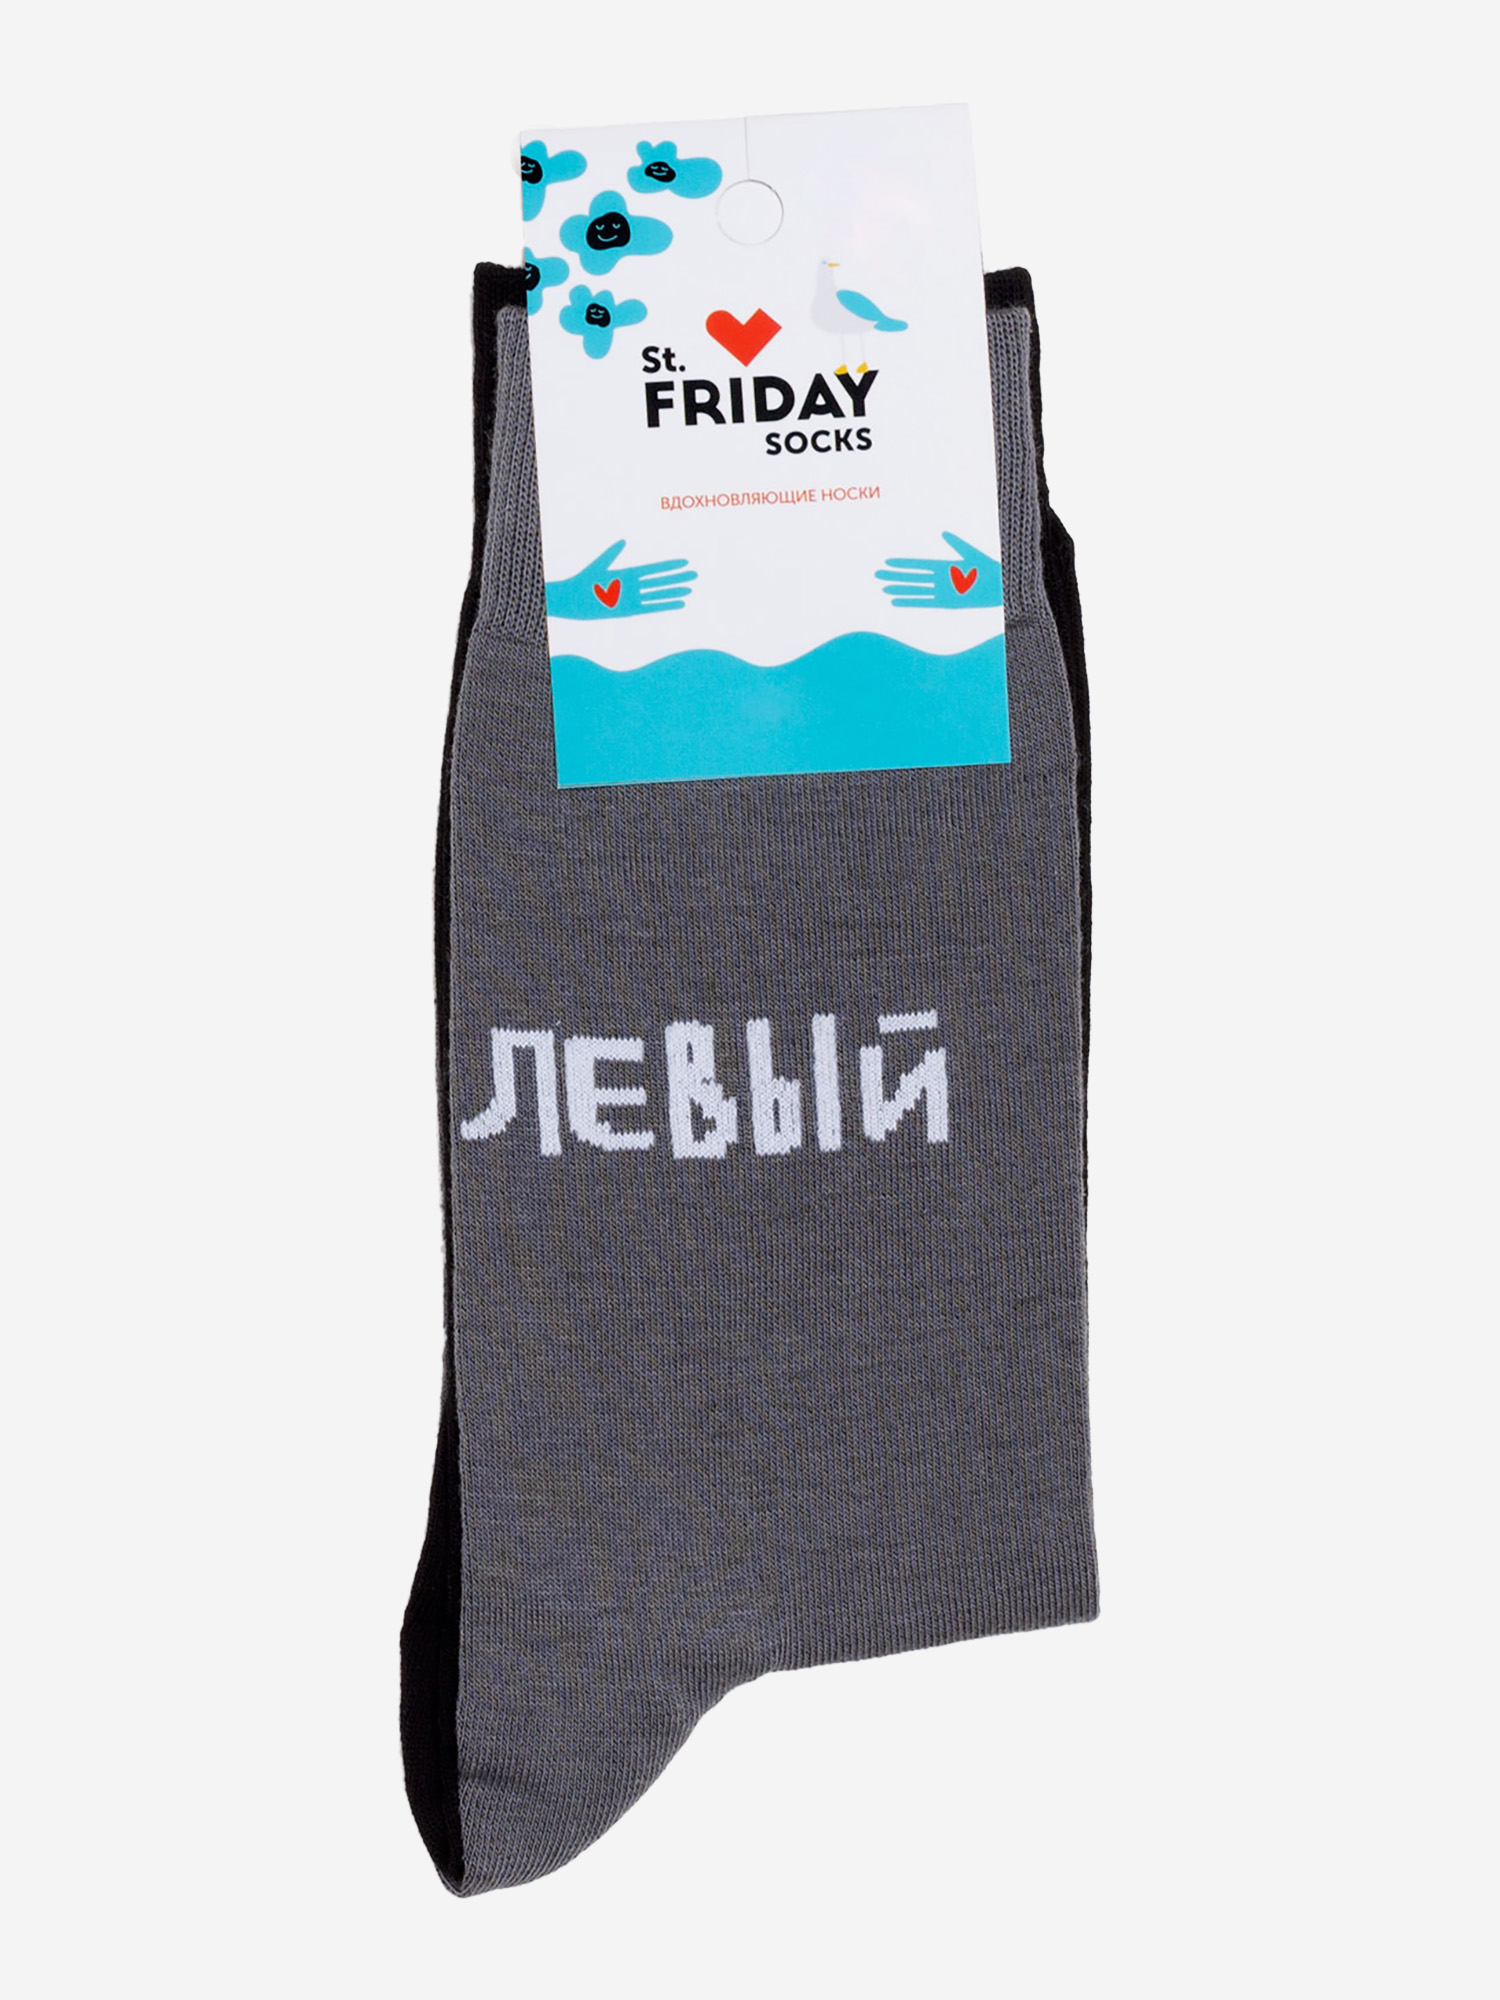 Носки с рисунками St.Friday Socks - Левый, Левый, Серый носки с рисунками st friday socks робозаяц серый